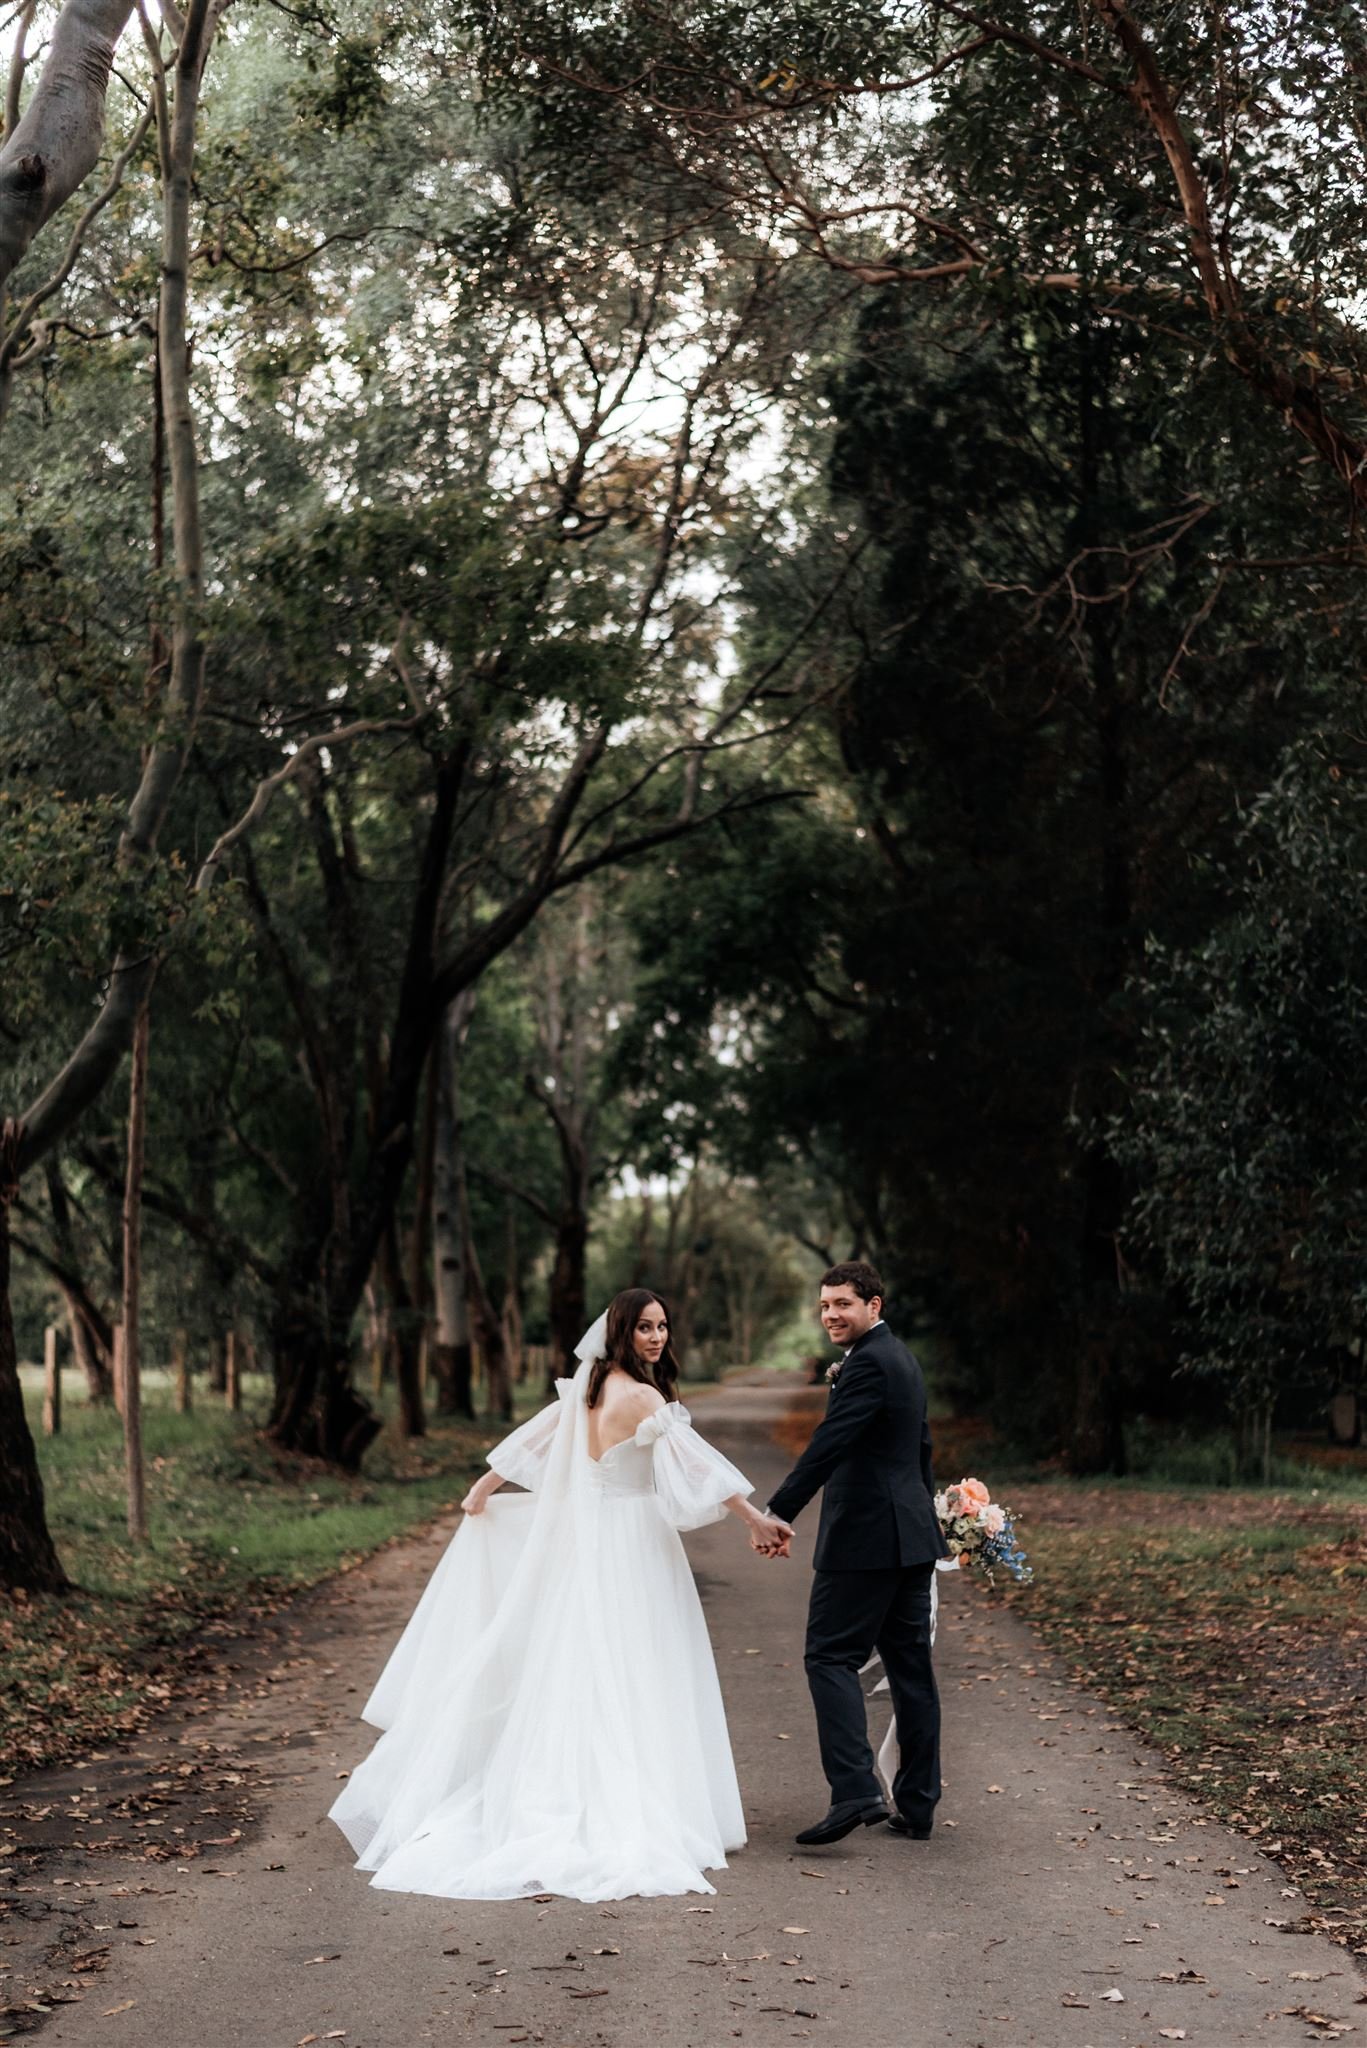 LOVELENSCAPES - Brisbane Wedding Photographer - Bundaleer - R + K -443_websize.jpg